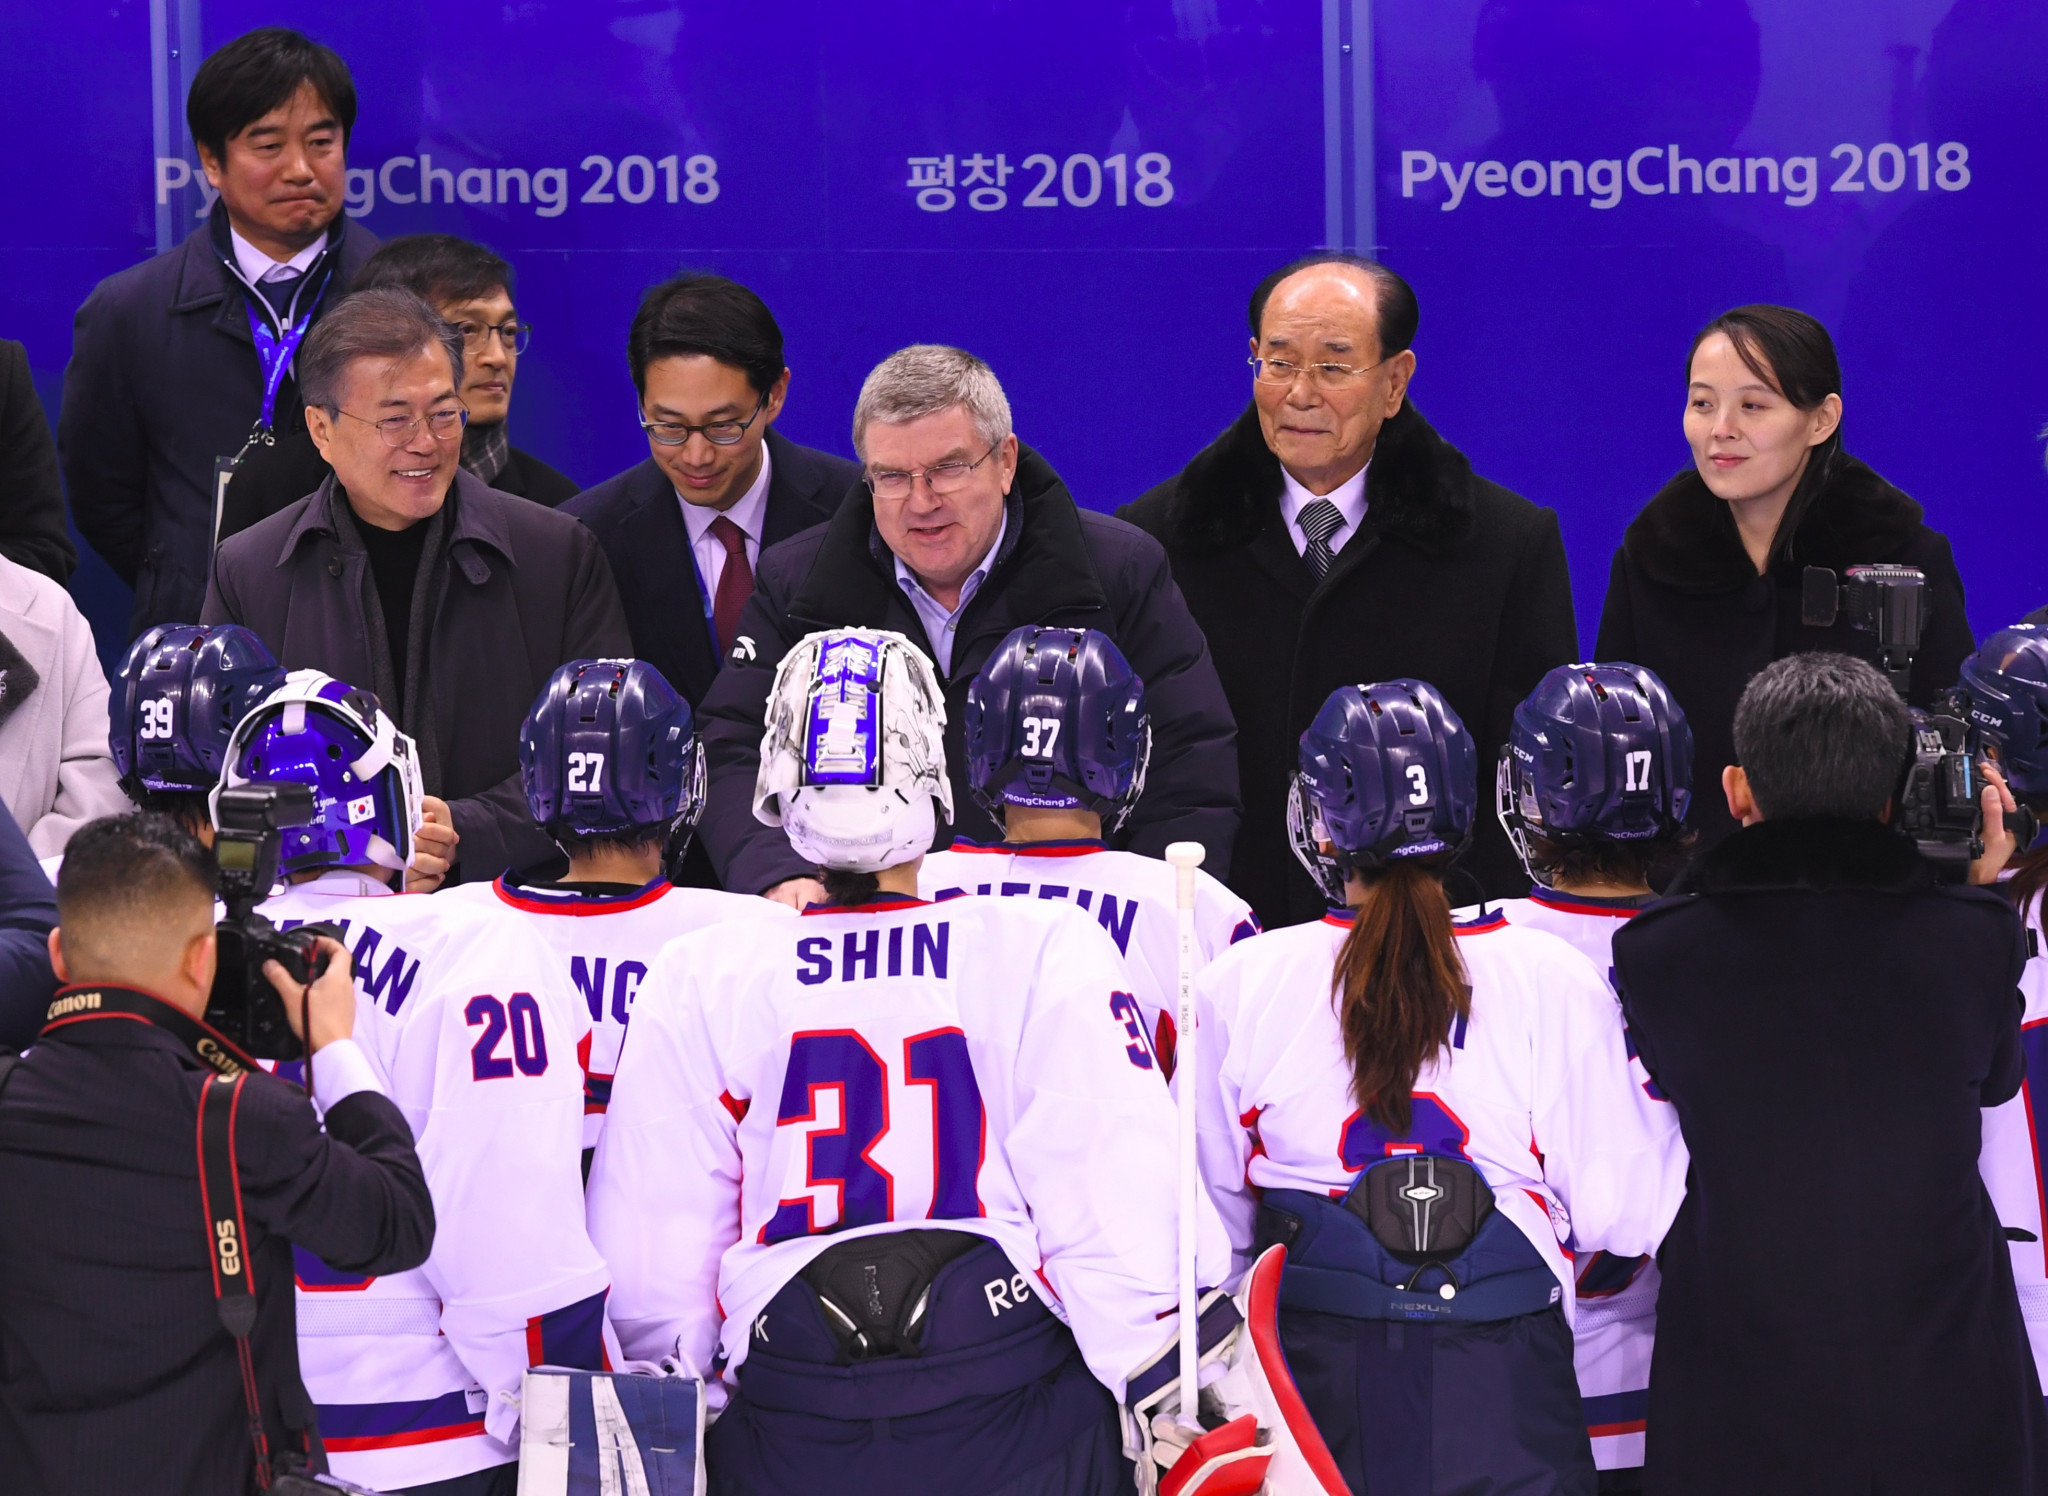 IOC President Thomas Bach addresses the unified Korean ice hockey team at Pyeongchang 2018